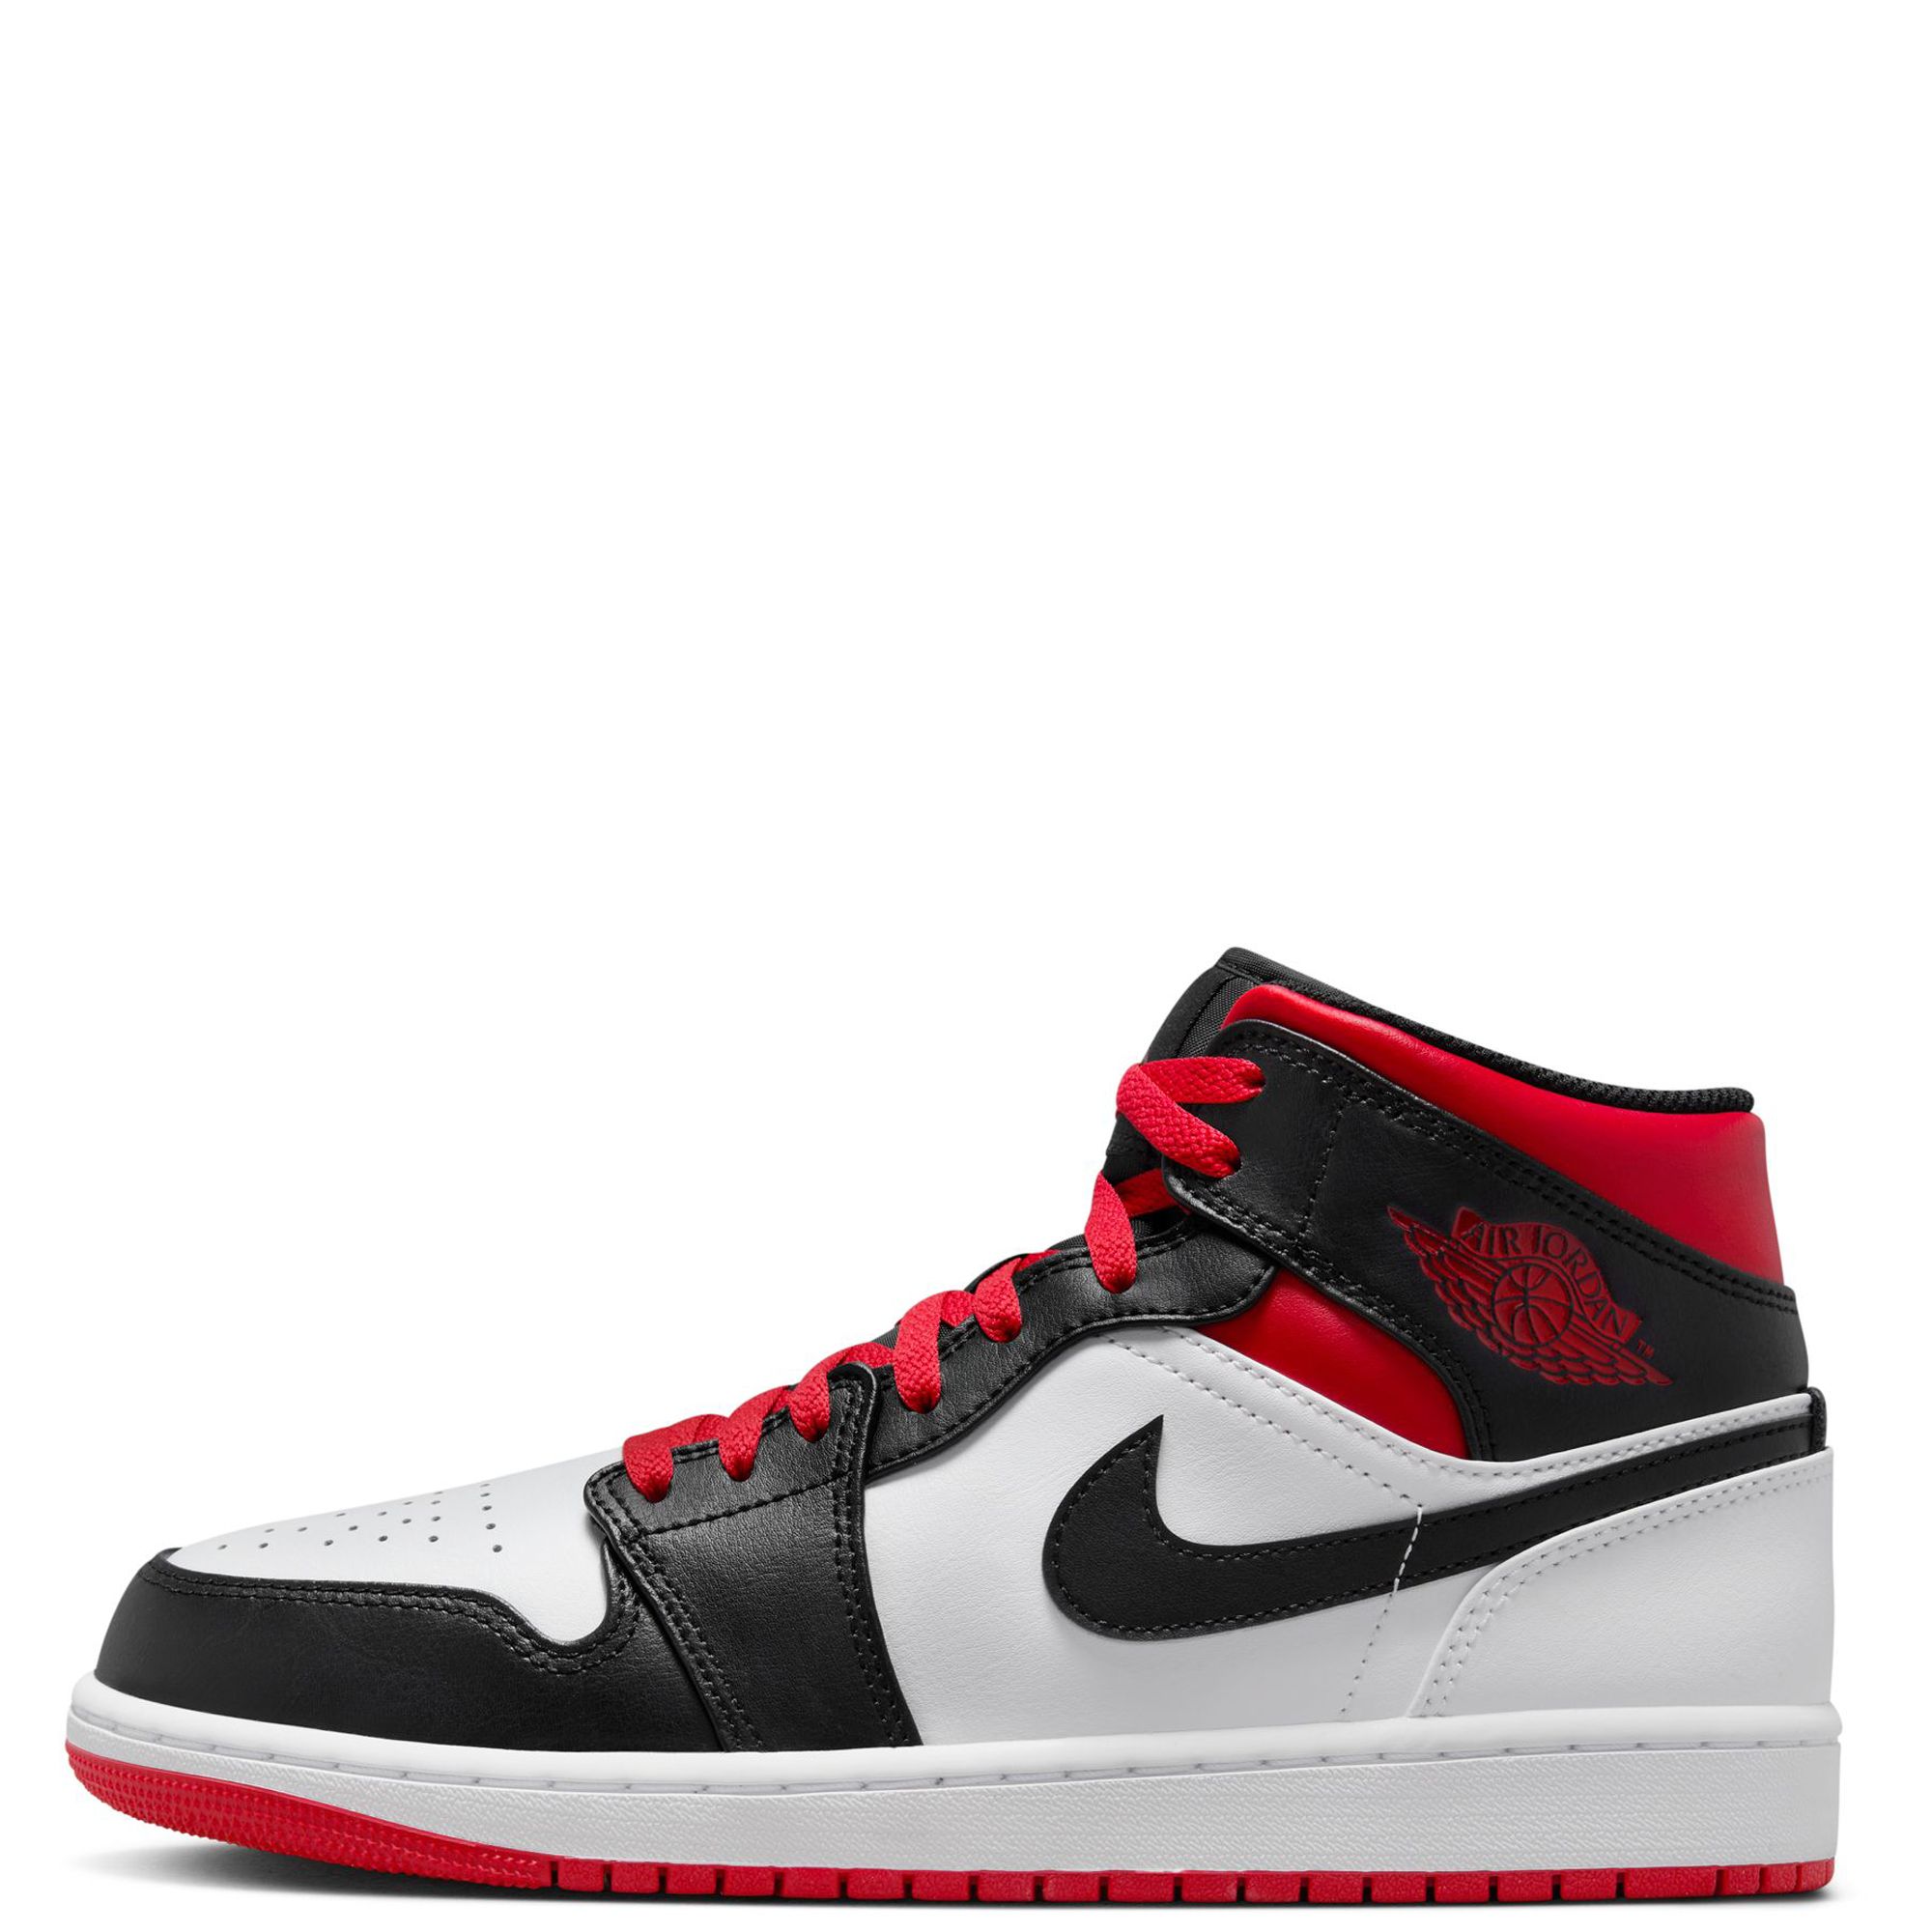 Air Jordan 1 High Top Leather Sneakers in Red - Nike